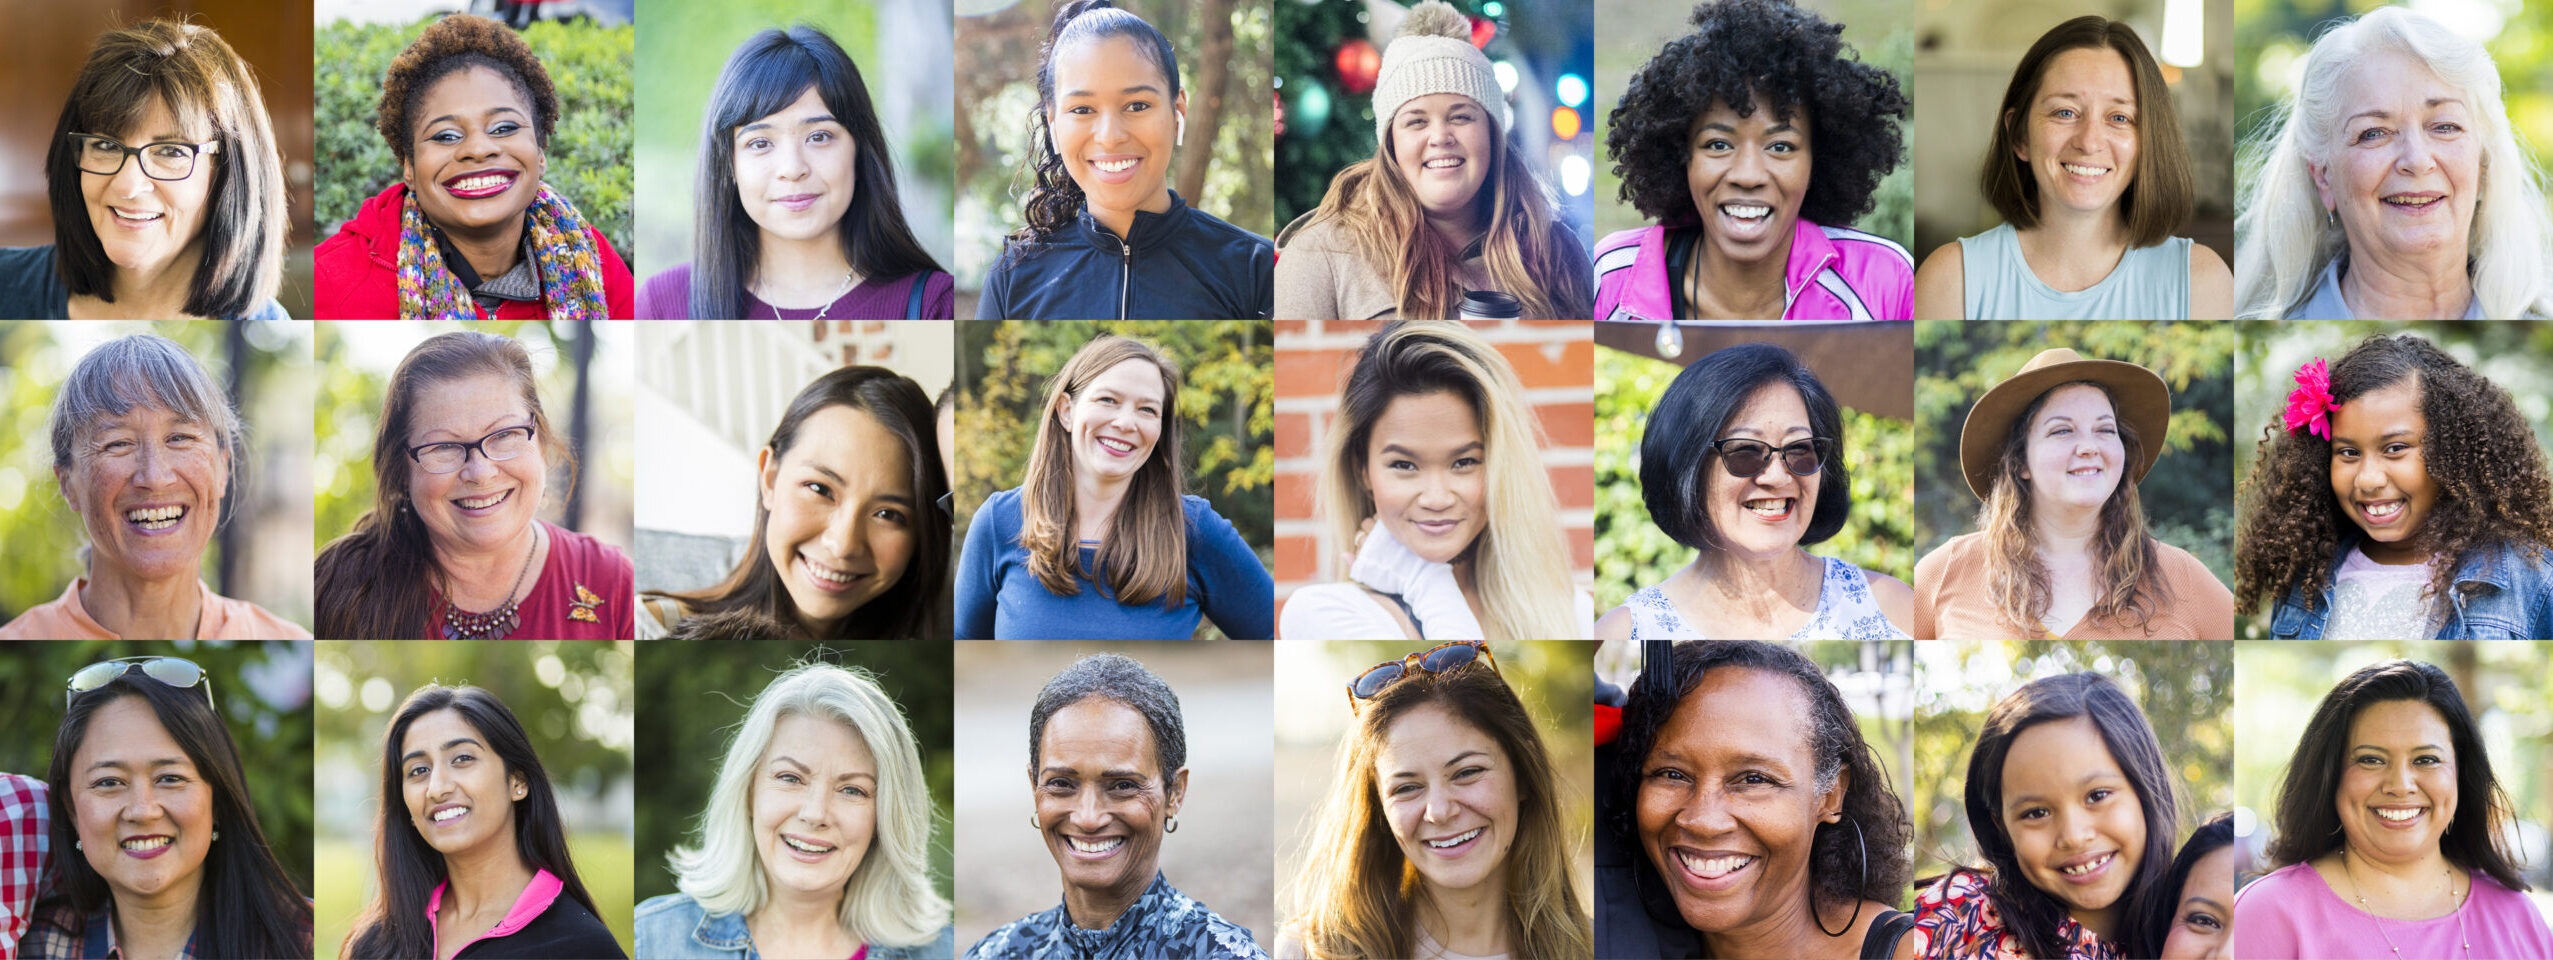 Faces of women entrepreneurs